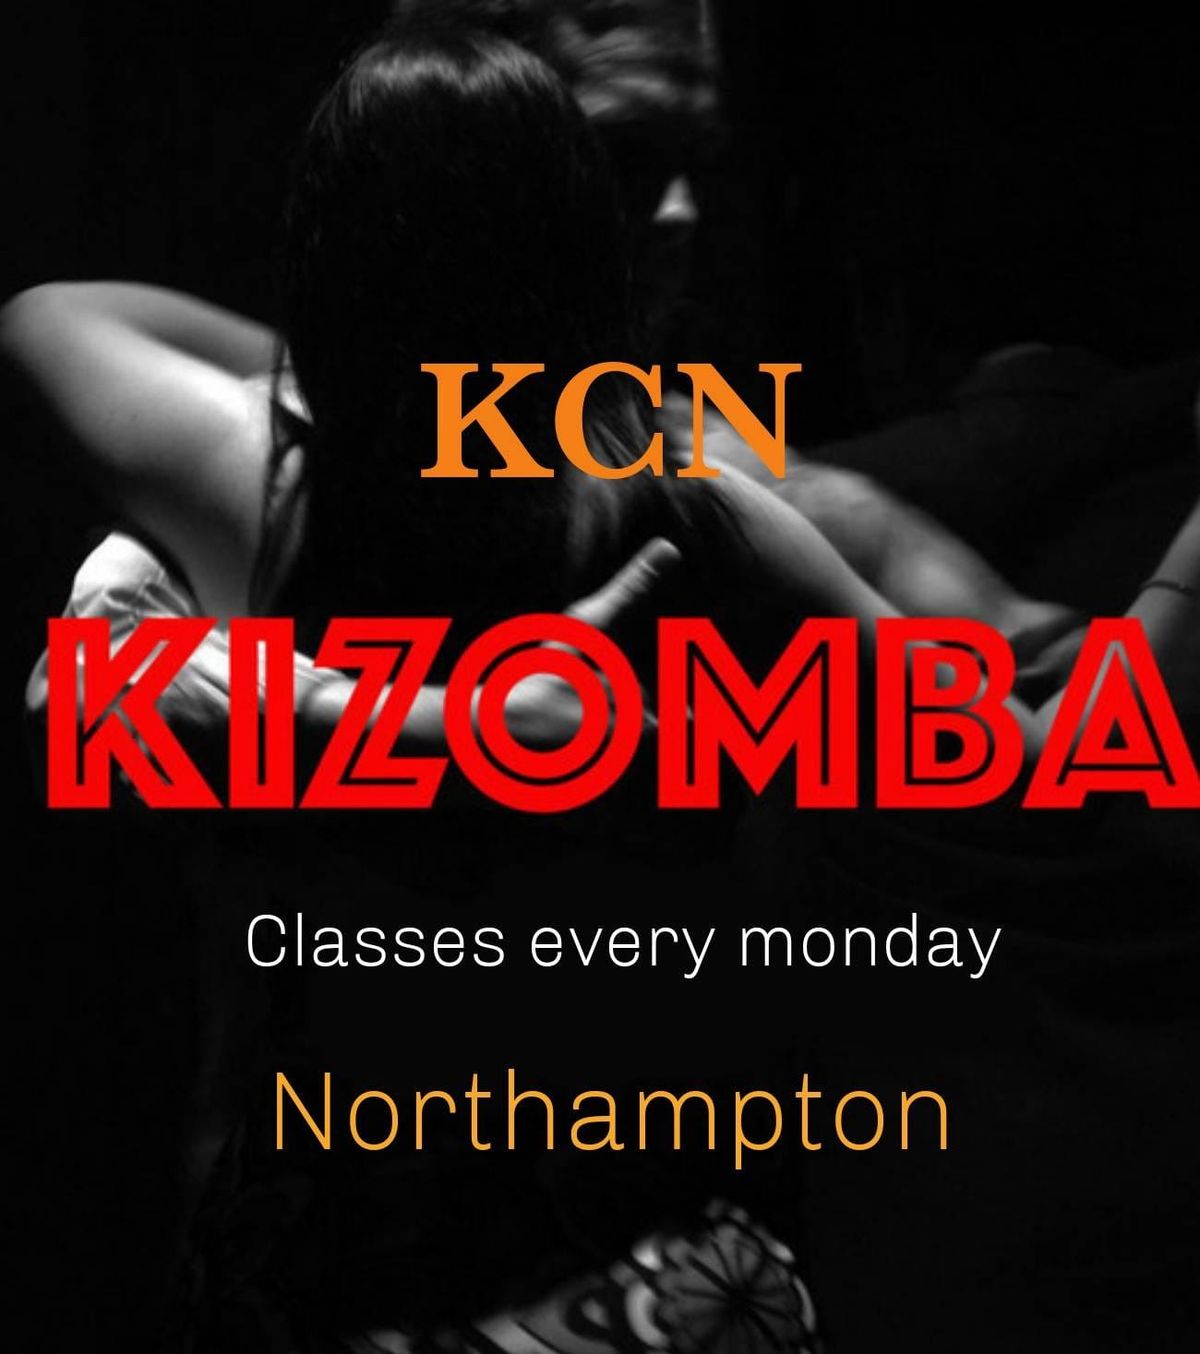 Kizomba club Northampton weekly classes